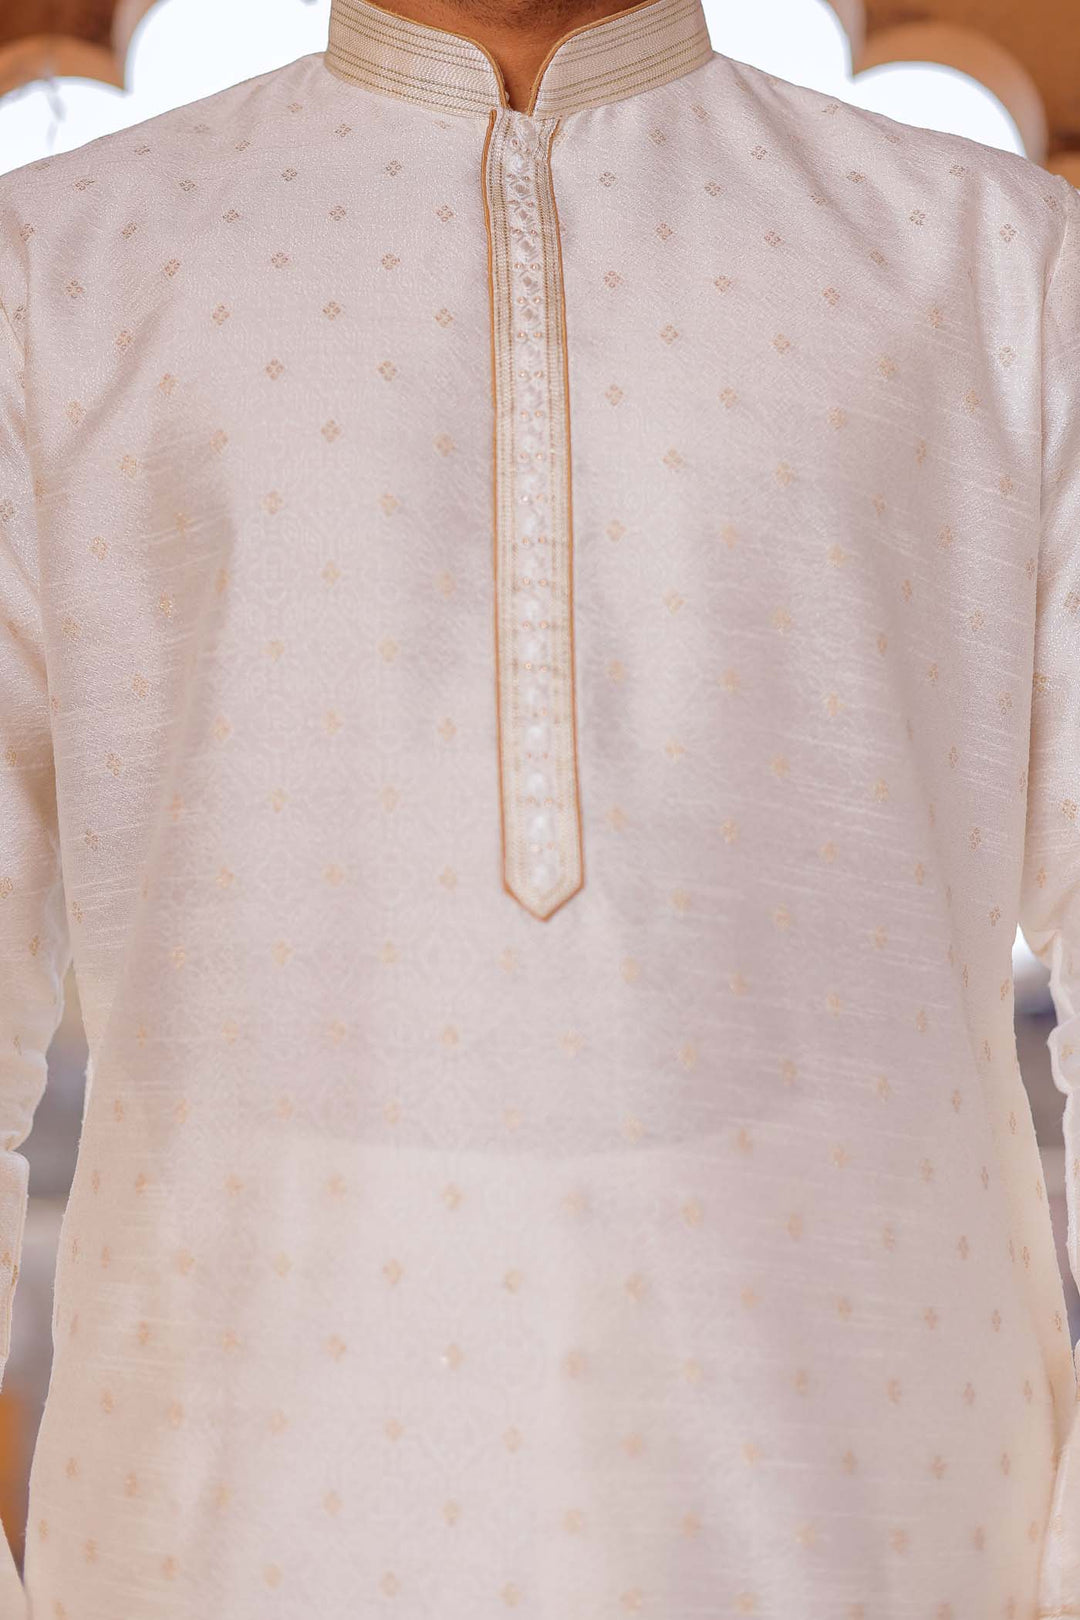 Off White Brocade Silk Kurta suit with resham thread embroidery.